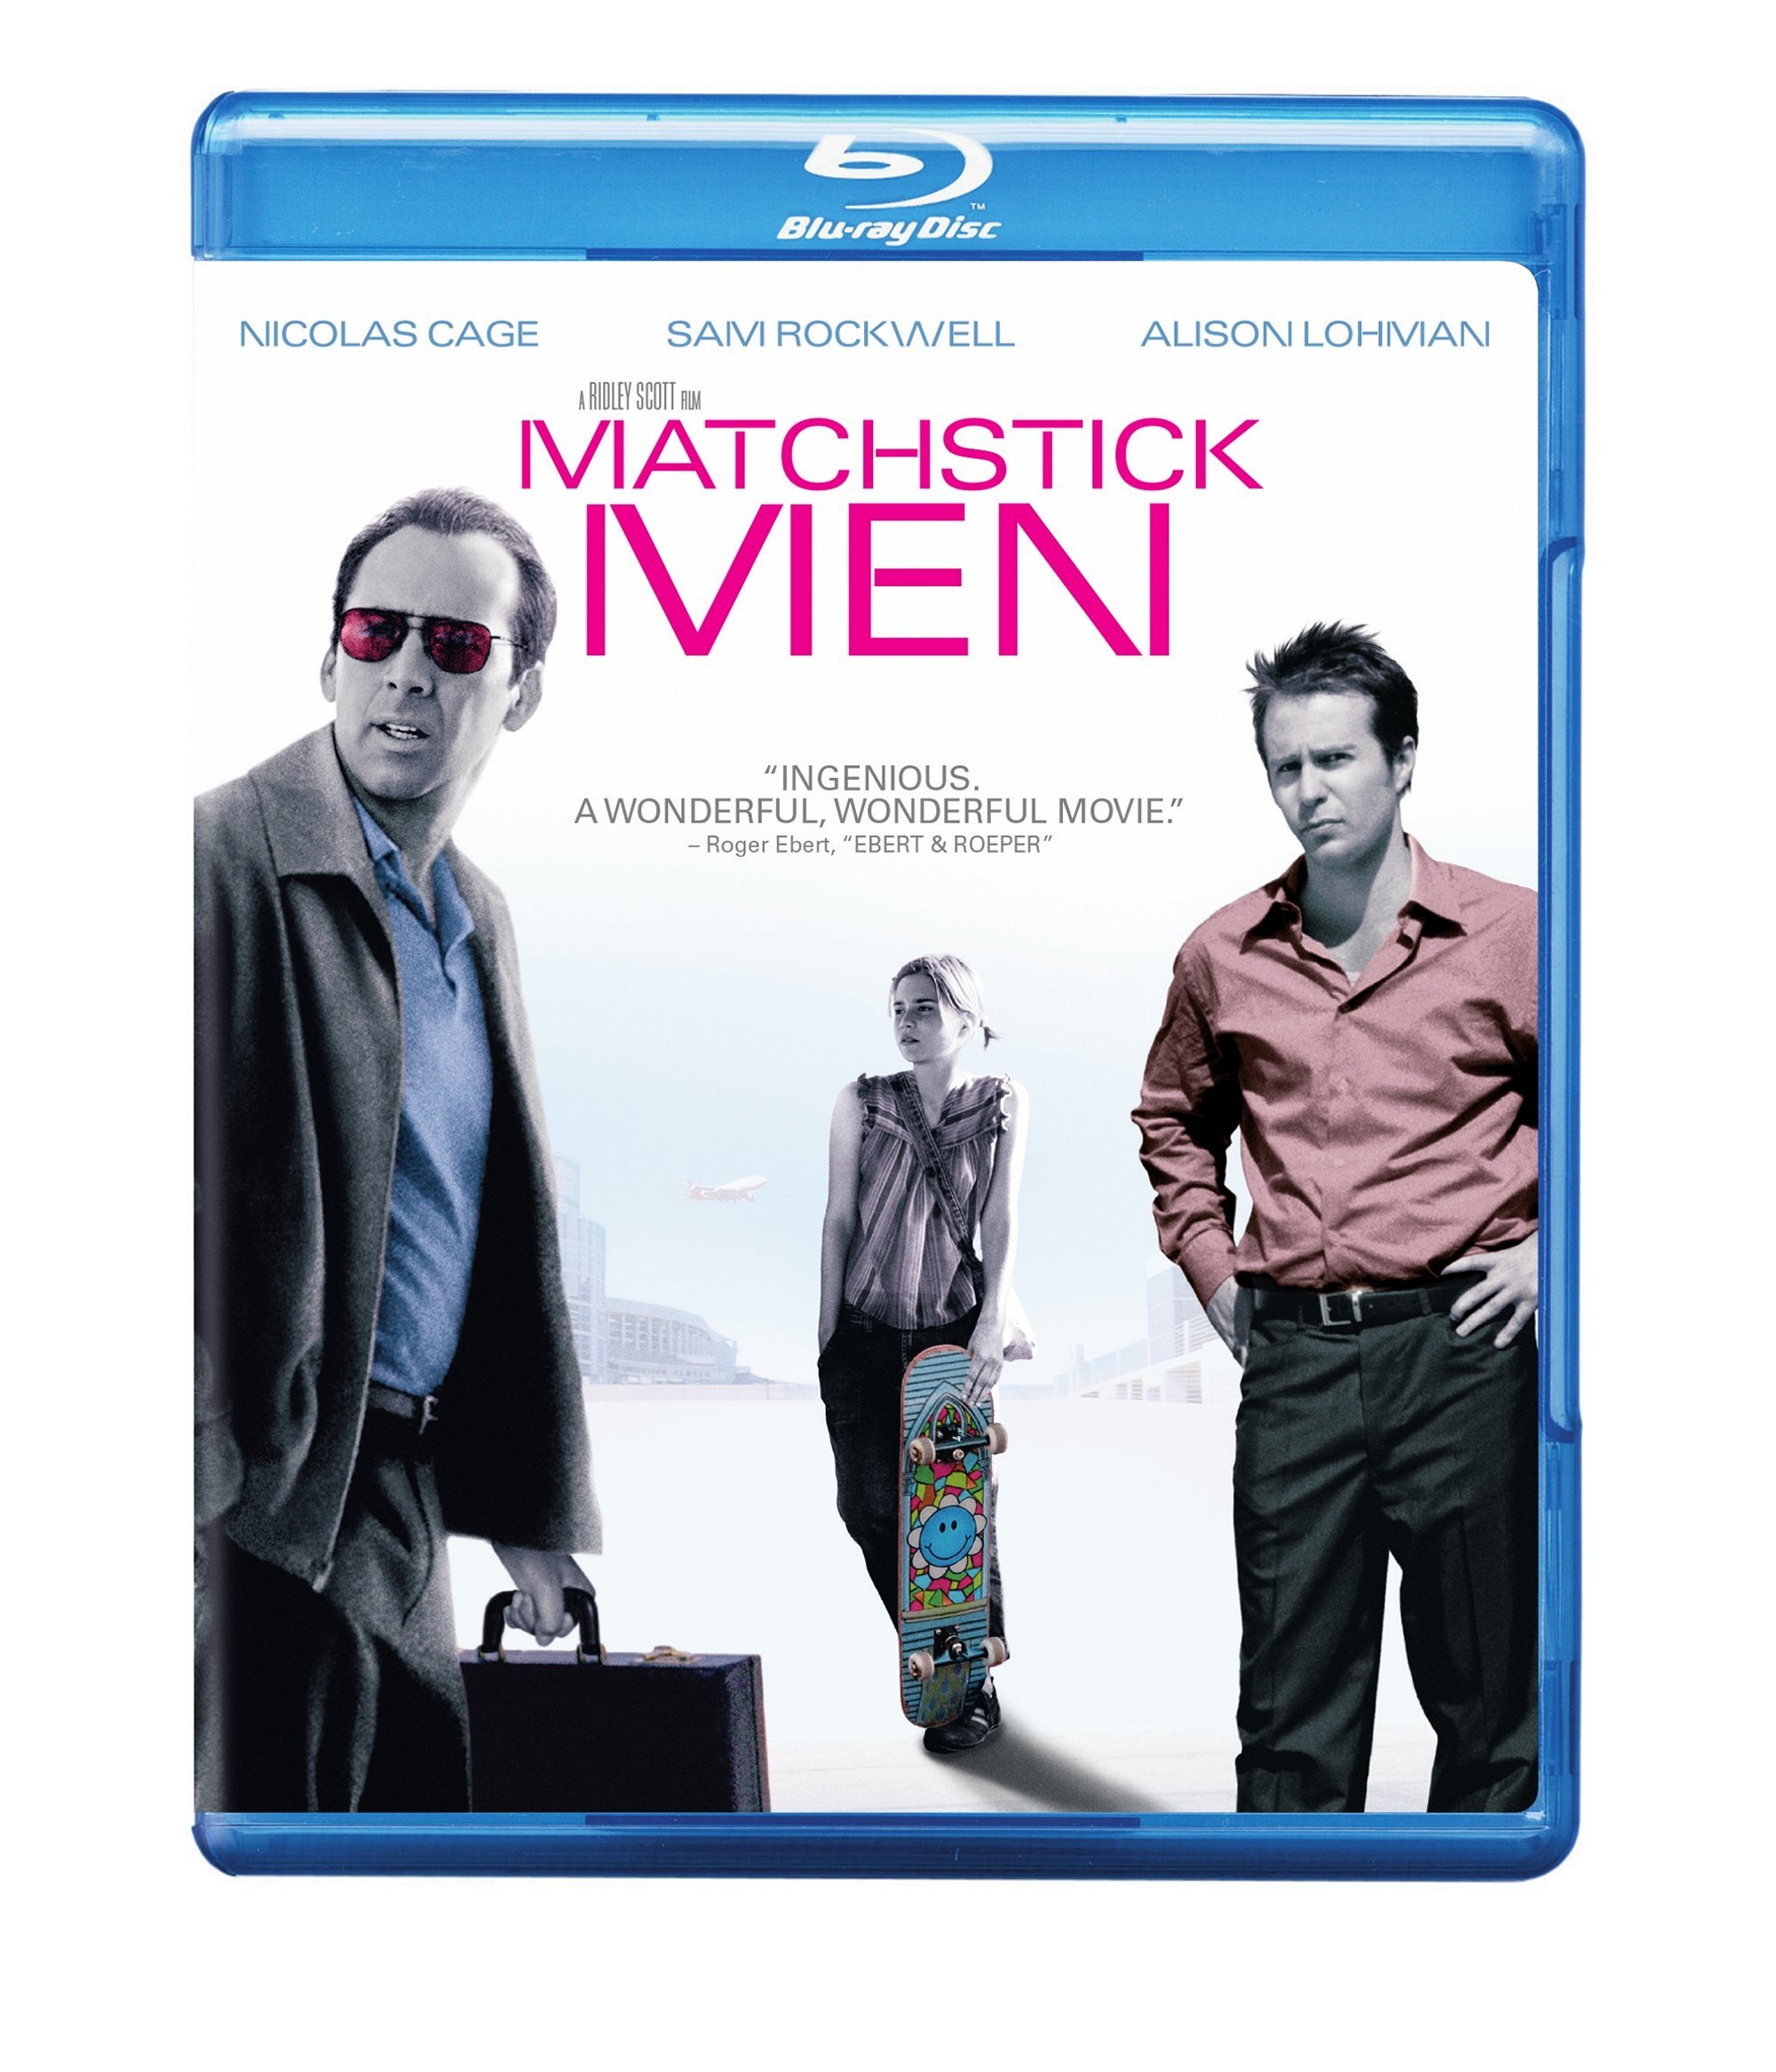 Matchstick Men - Blu-ray [ 2003 ]  - Comedy Movies On Blu-ray - Movies On GRUV